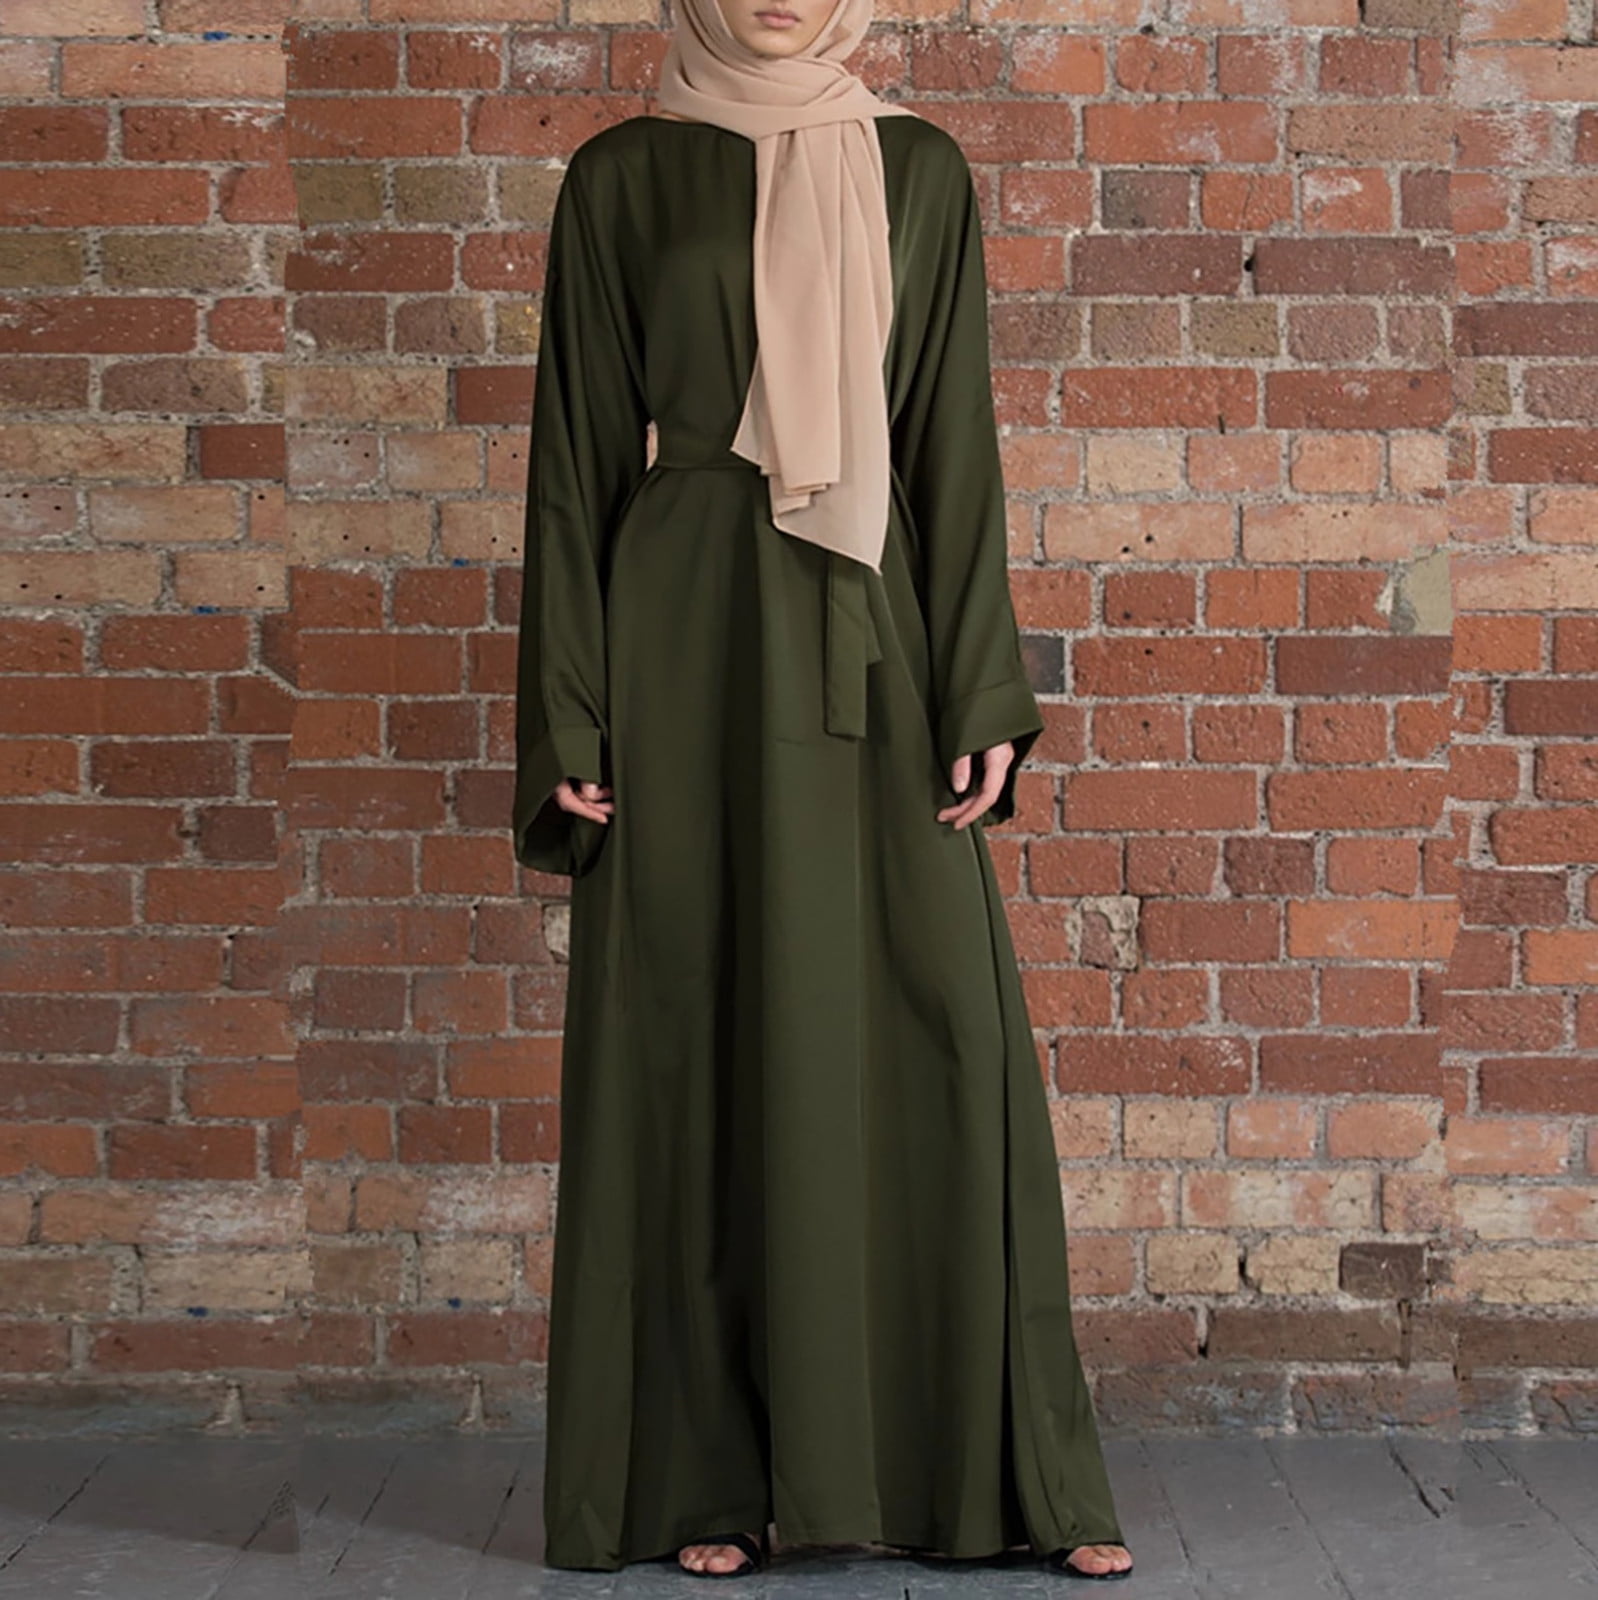 VPPDXHL Women's Long Sleeve Maxi Dress Muslim Abaya Robe Plain Simple Modern  Islamic Arabic Style Casual Dress 